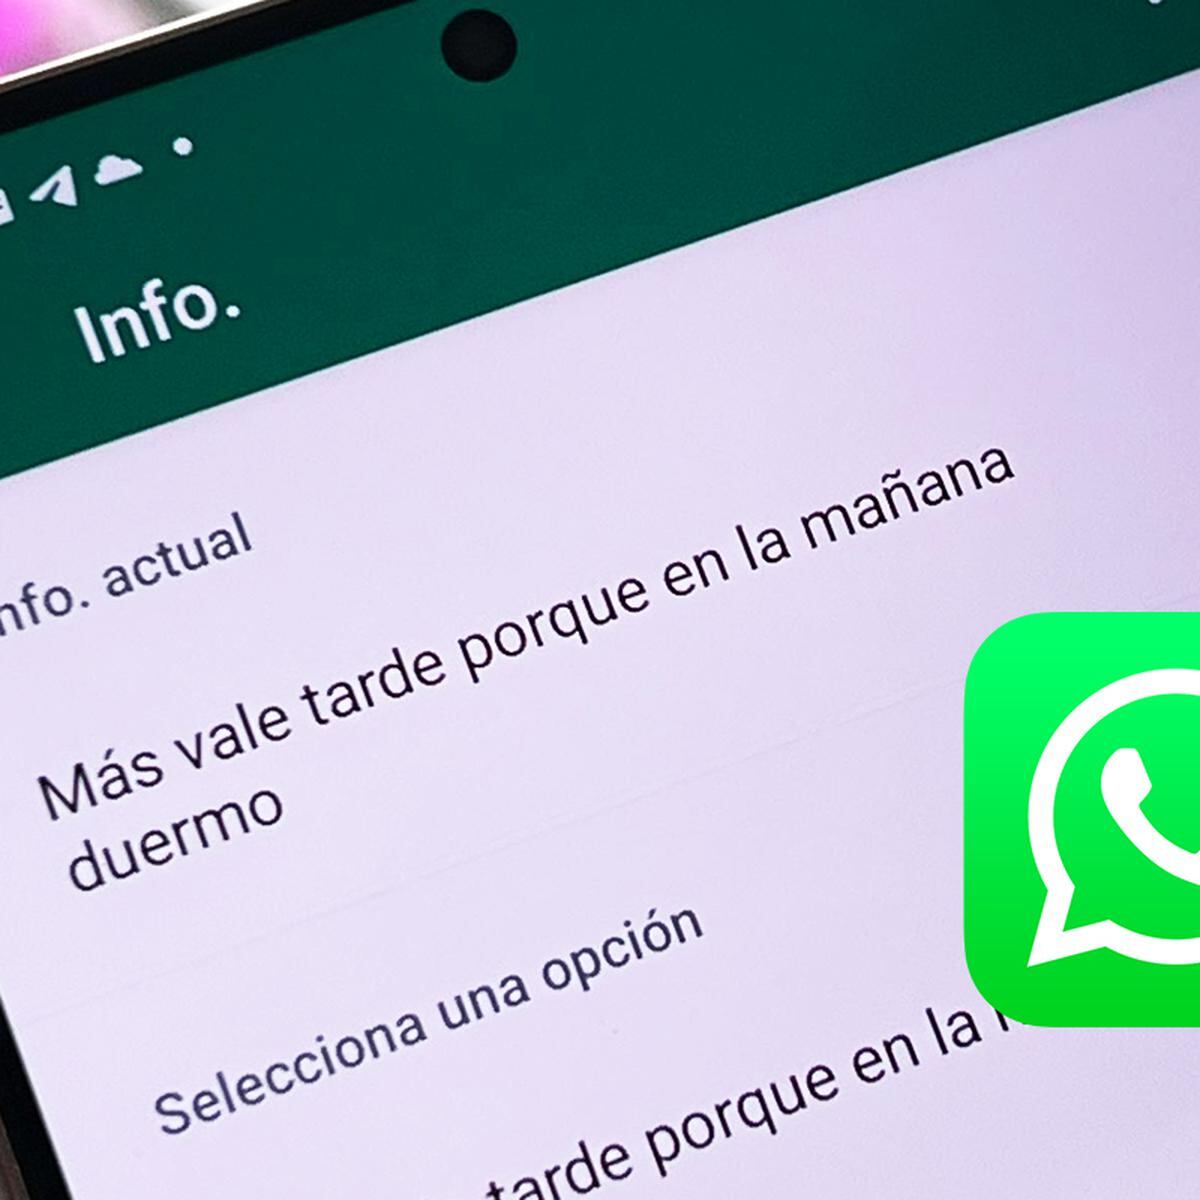 WhatsApp | Mejores frases para info | Smartphone | Aplicaciones | Tutorial  | nnda | nnni | DATA | MAG.